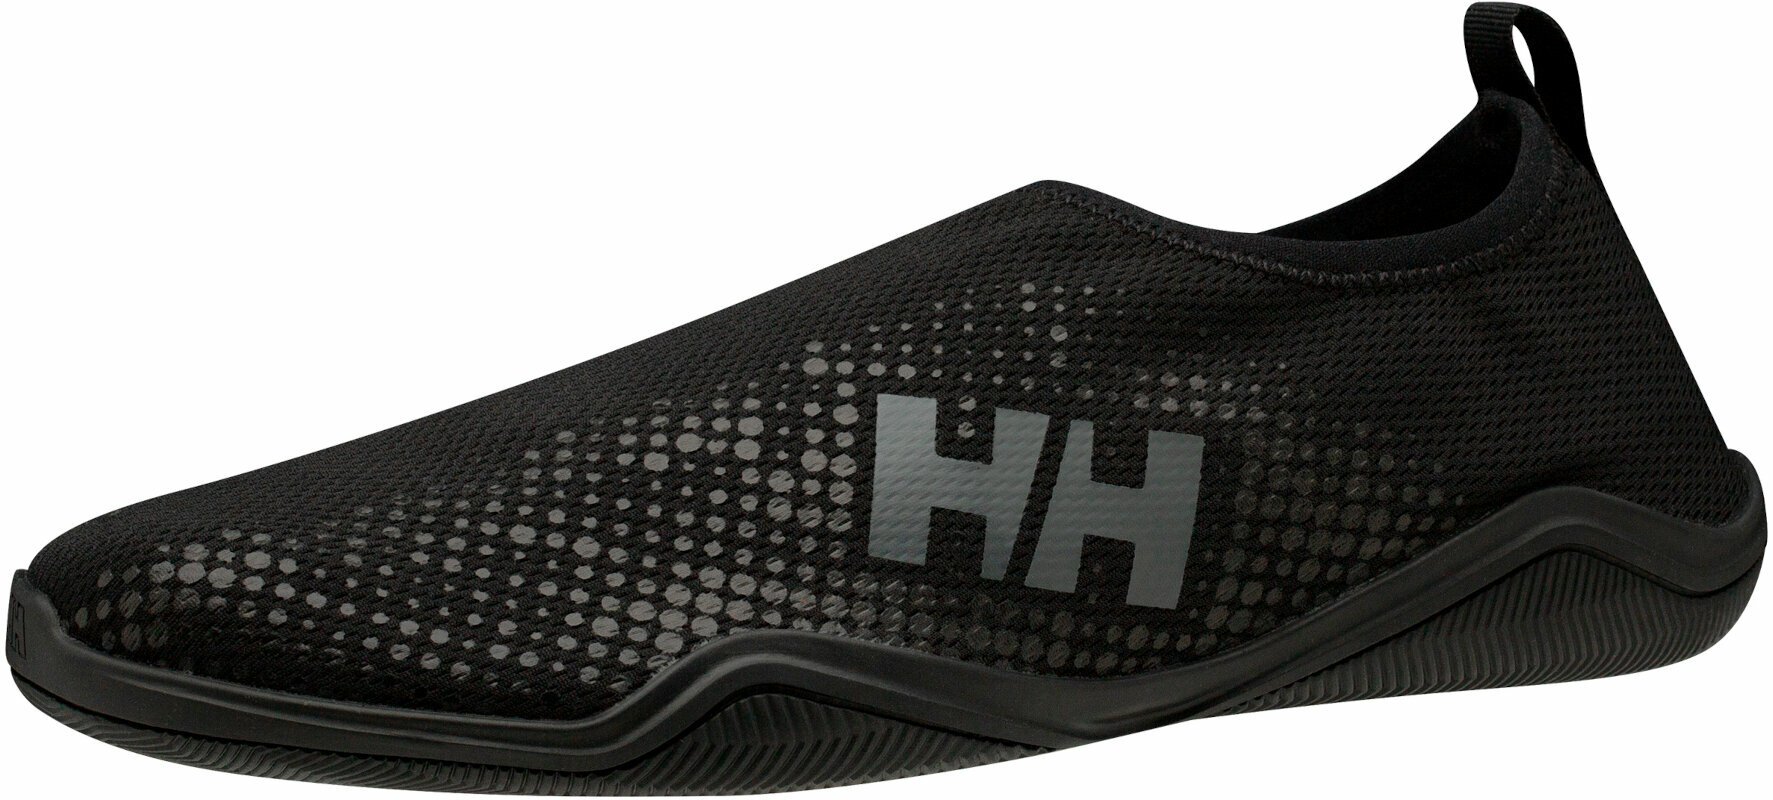 Mens Sailing Shoes Helly Hansen Men's Crest Watermoc Black/Charcoal 44,5